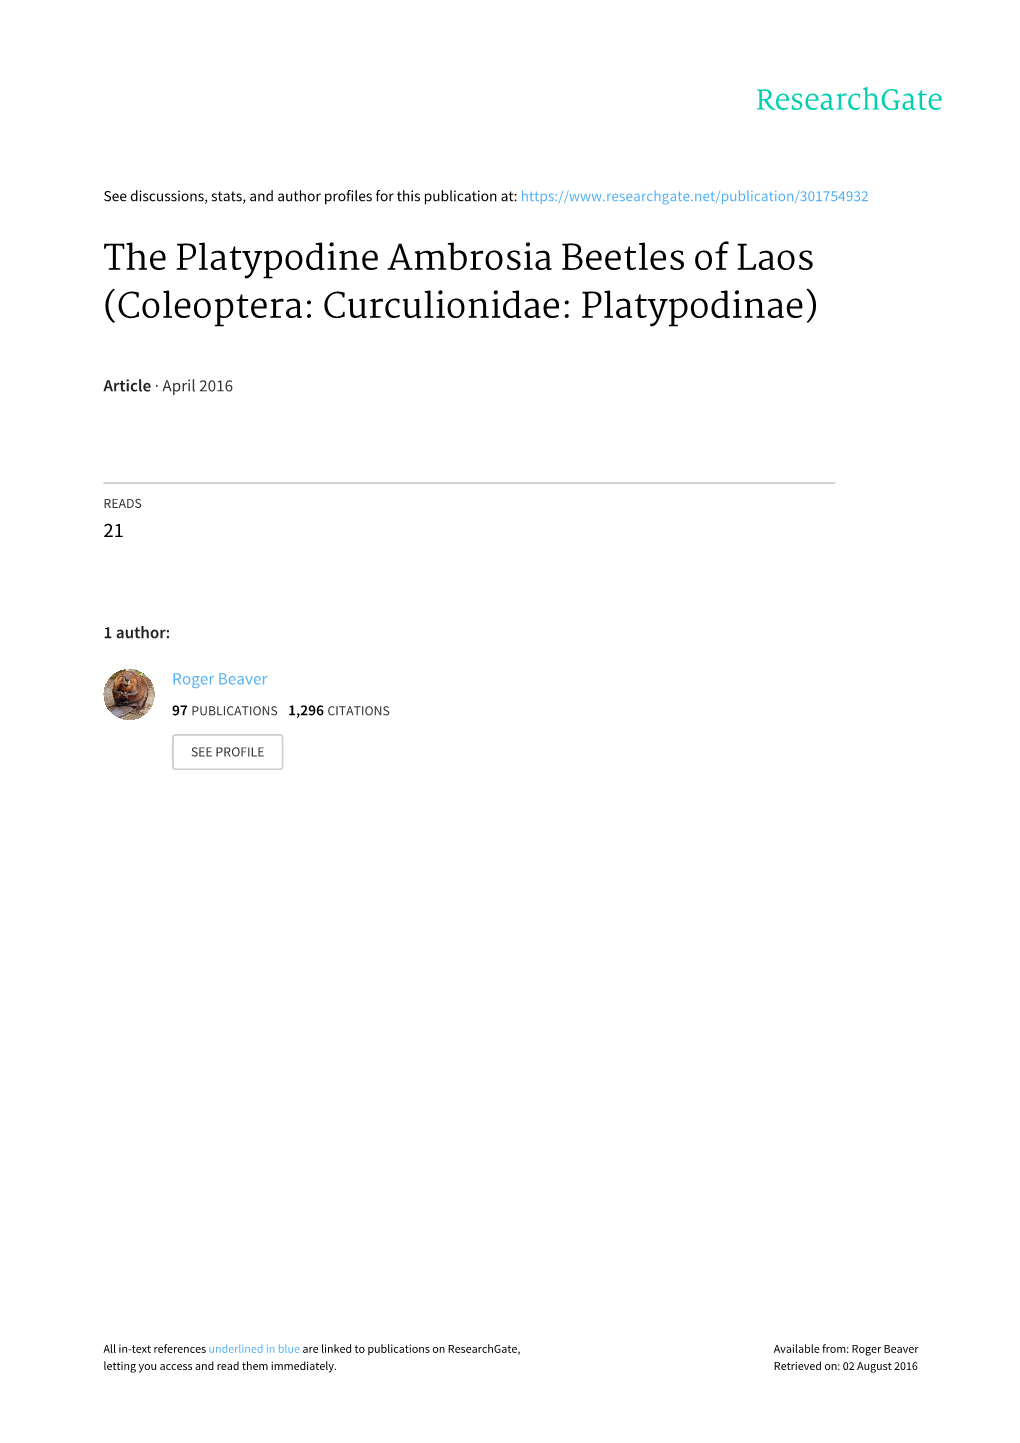 The Platypodine Ambrosia Beetles of Laos (Coleoptera: Curculionidae: Platypodinae)